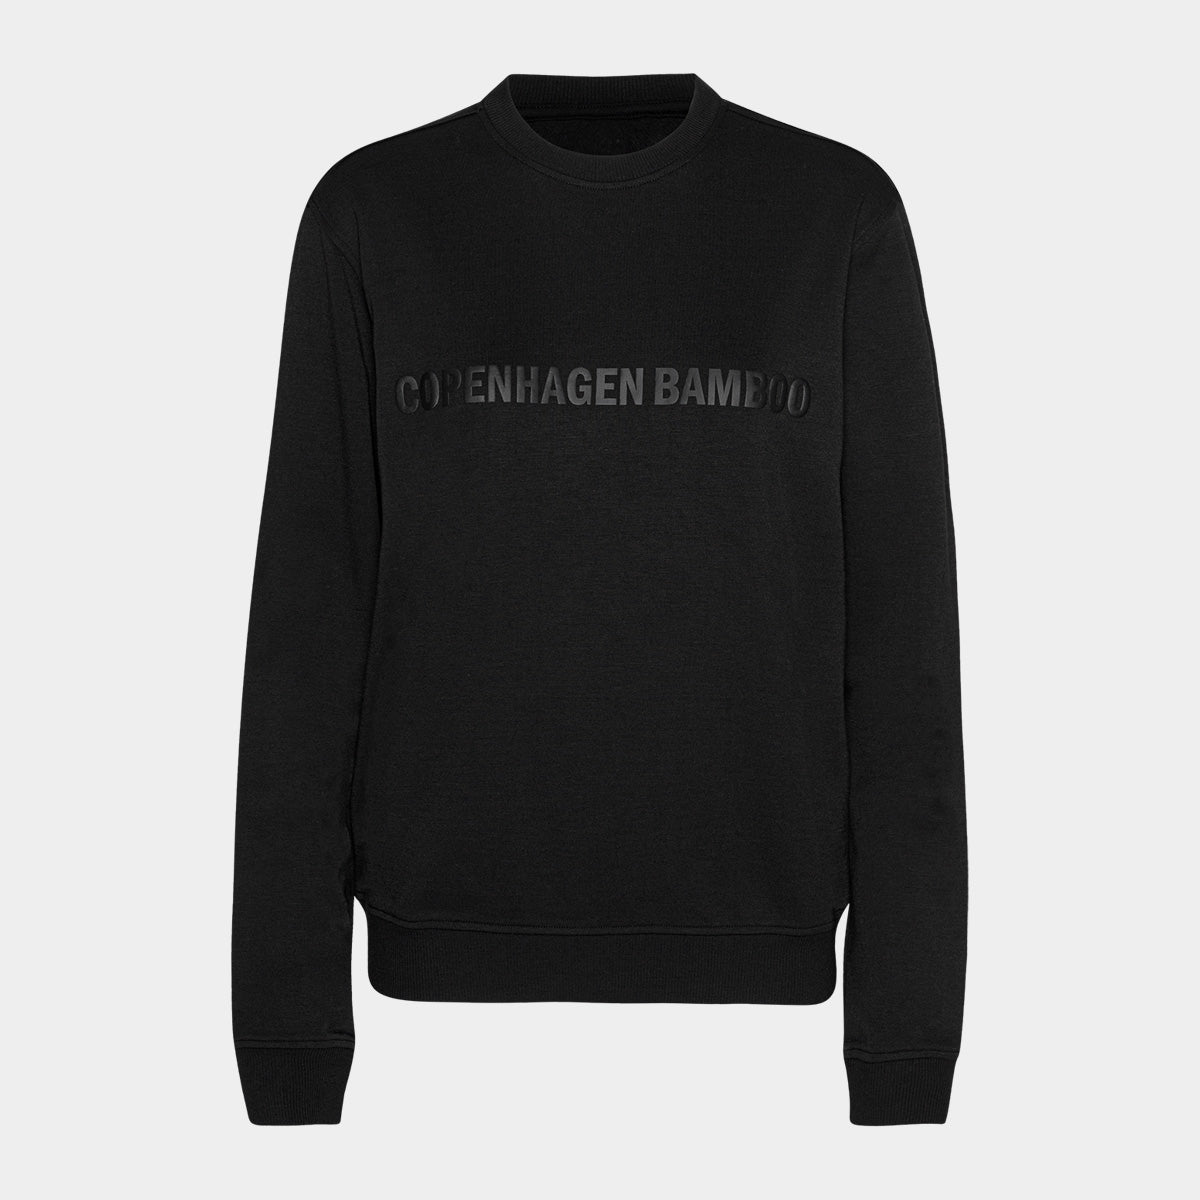 Se Sort bambus sweatshirt til mænd med logo fra Copenhagen Bamboo, S hos Bambustøj.dk